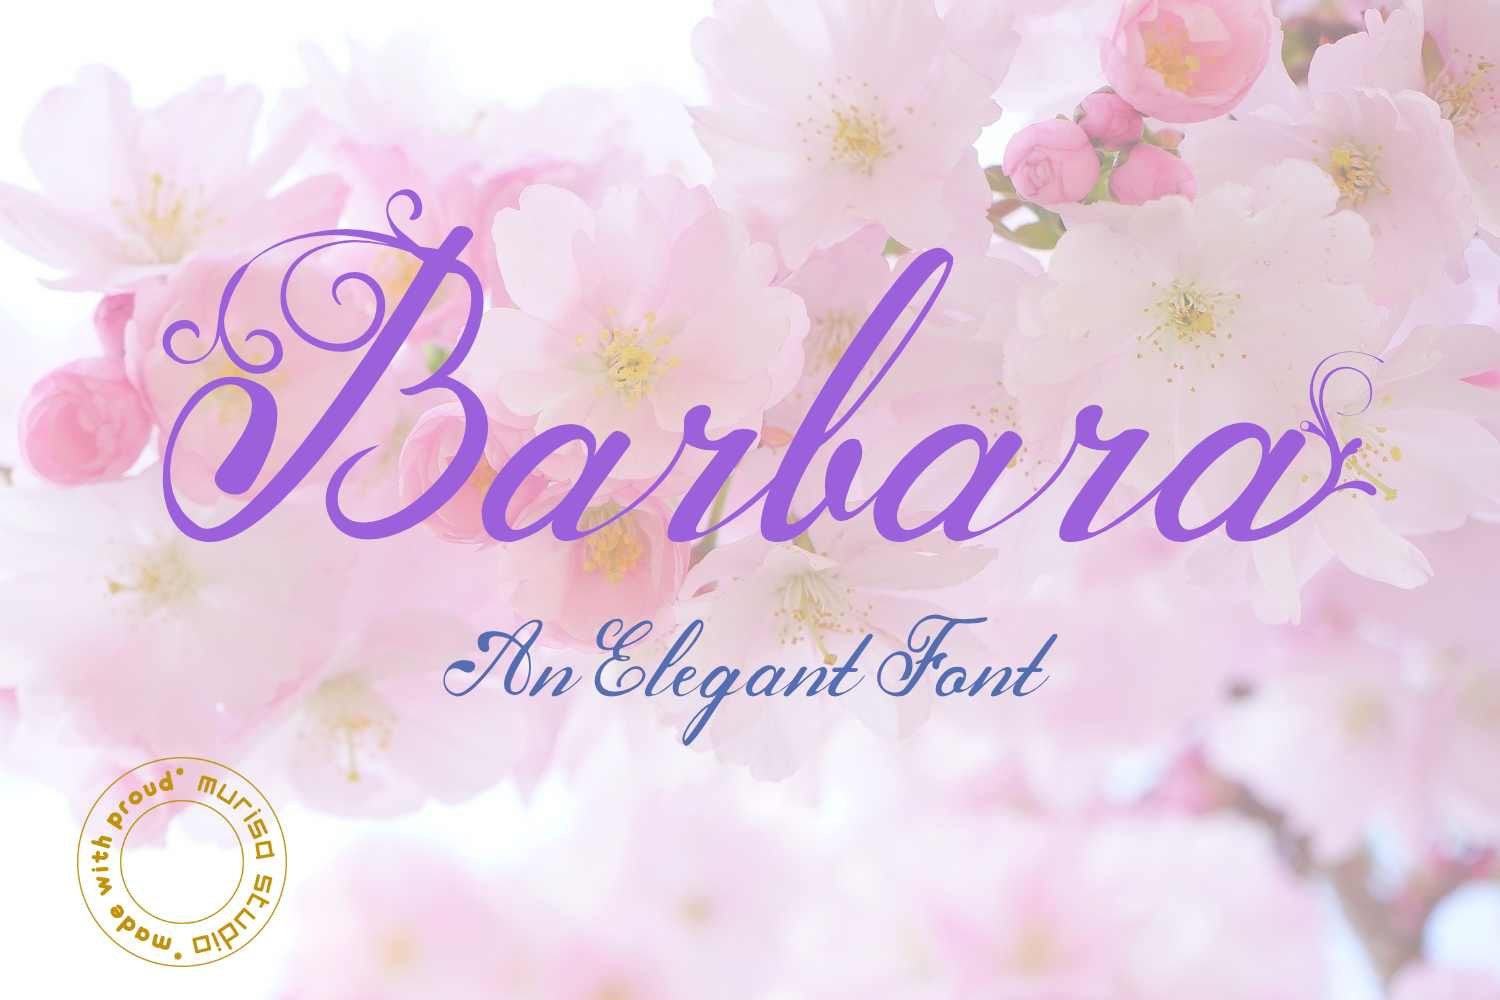 Barbara Calligraphy Font